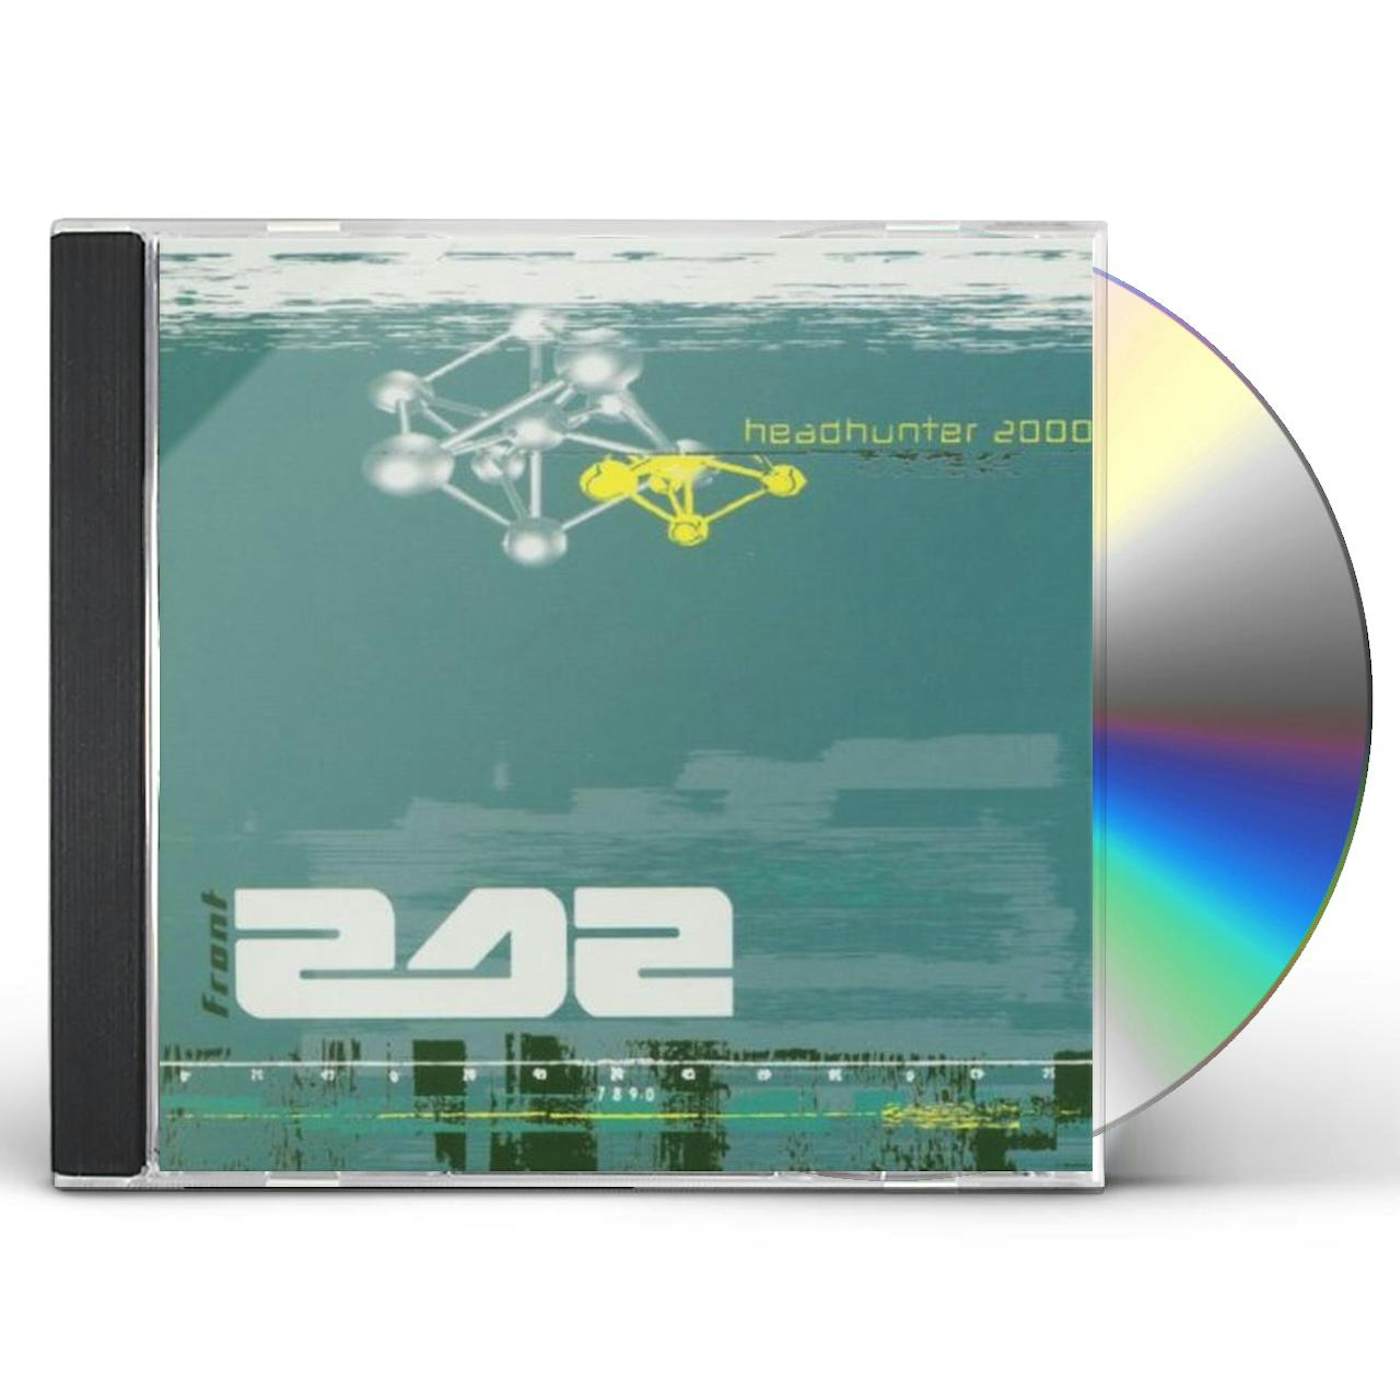 Front 242 HEADHUNTER 2000 CD